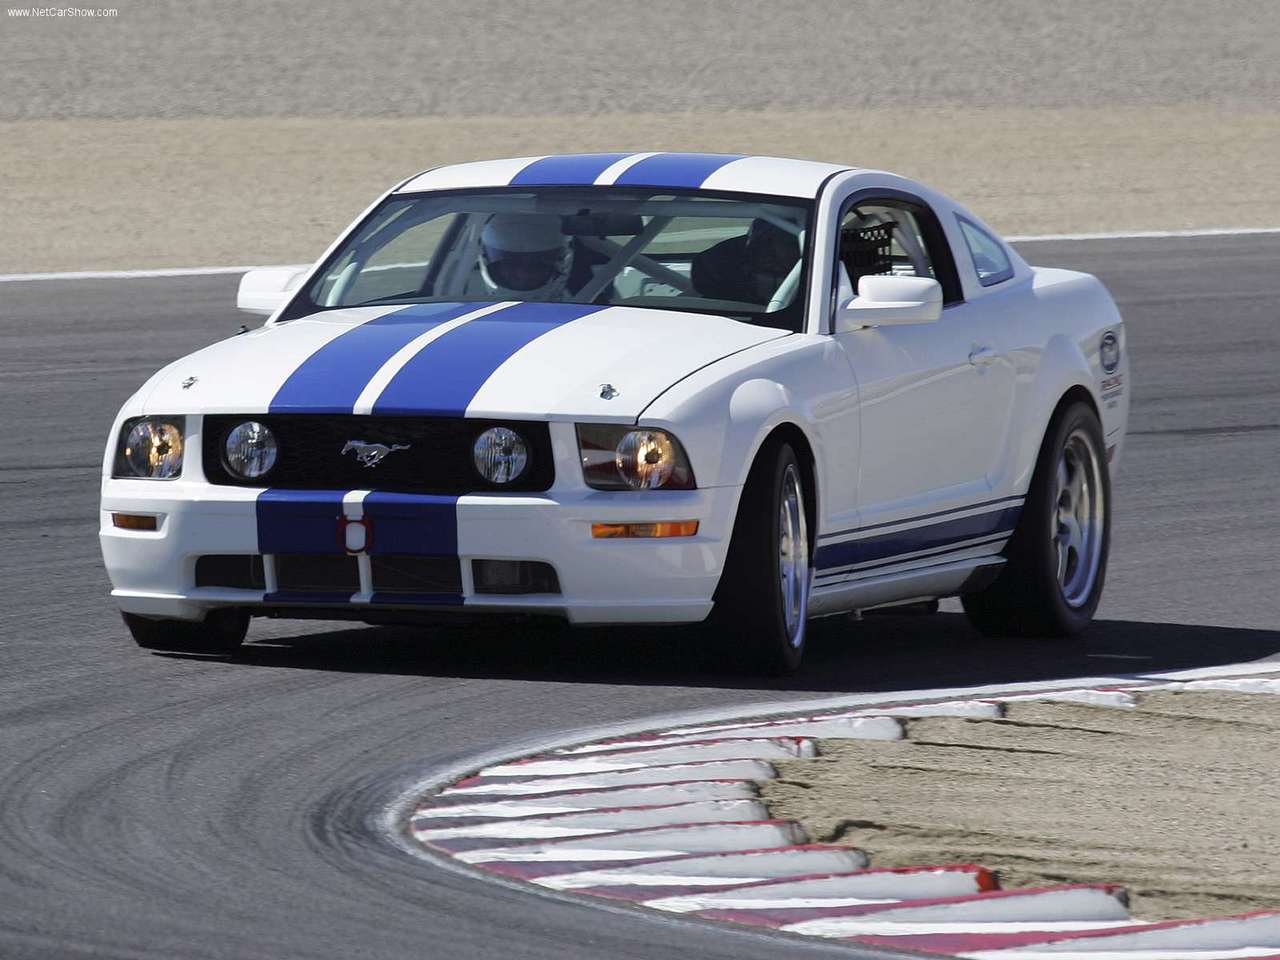 http://3.bp.blogspot.com/-k8pdaD7QEn8/TY0GDBdbLNI/AAAAAAAAGto/HceaV7sZxOk/s1600/Ford-Mustang_Racecar_Prototype_2005_1280x960_wallpaper_02.jpg